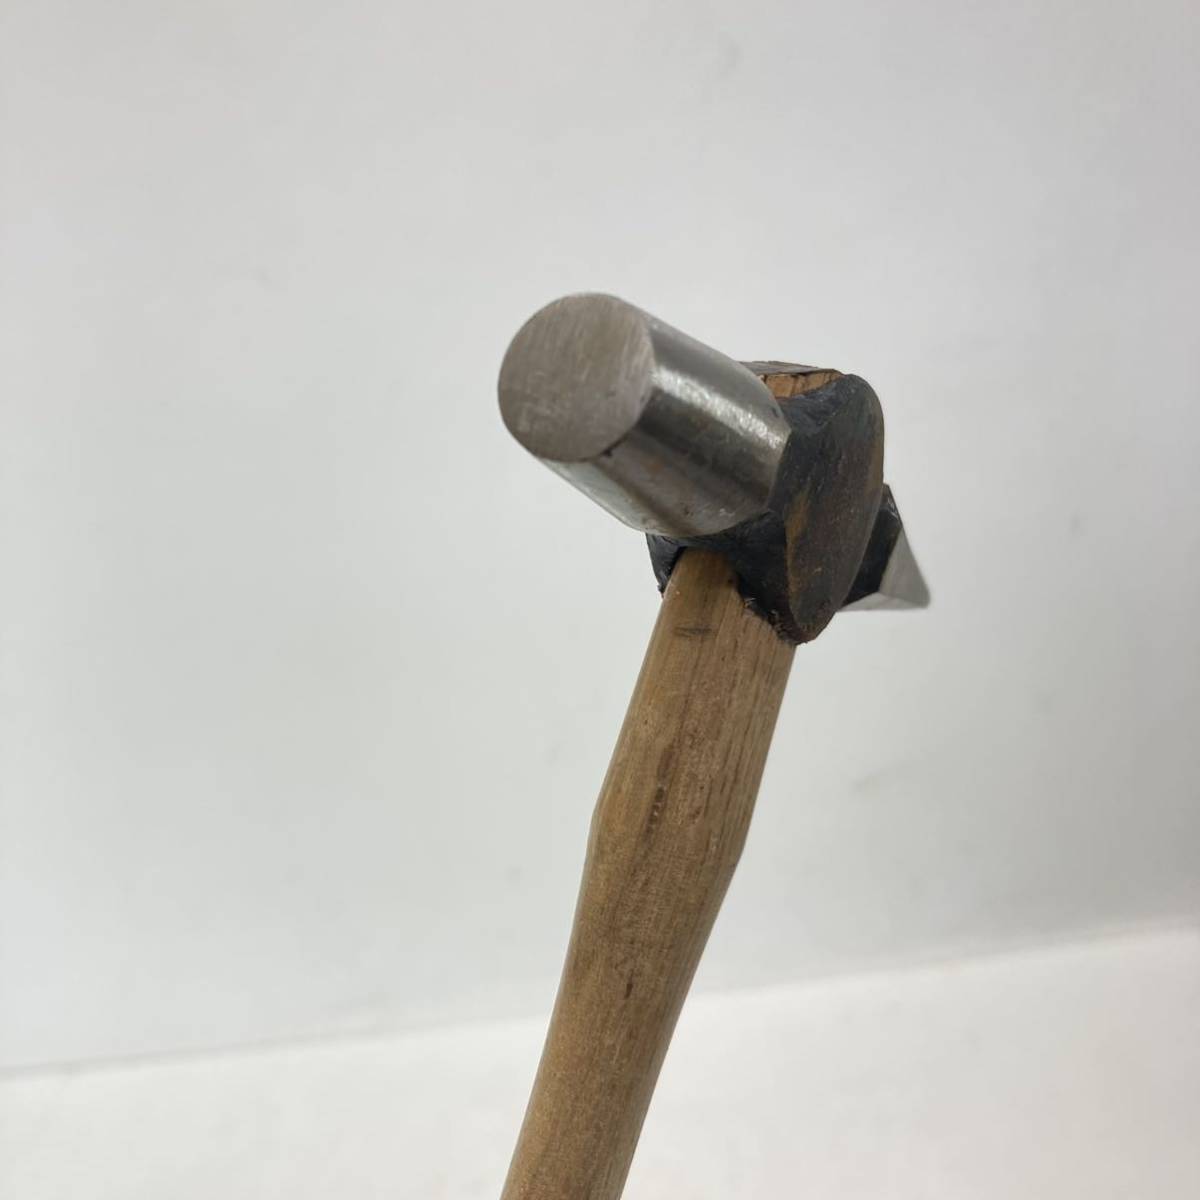  earth cow DOGYU test hammer gold hammer hammer 1/4P 15mm carpenter's tool railroad maintenance worker tool metallic material unused 